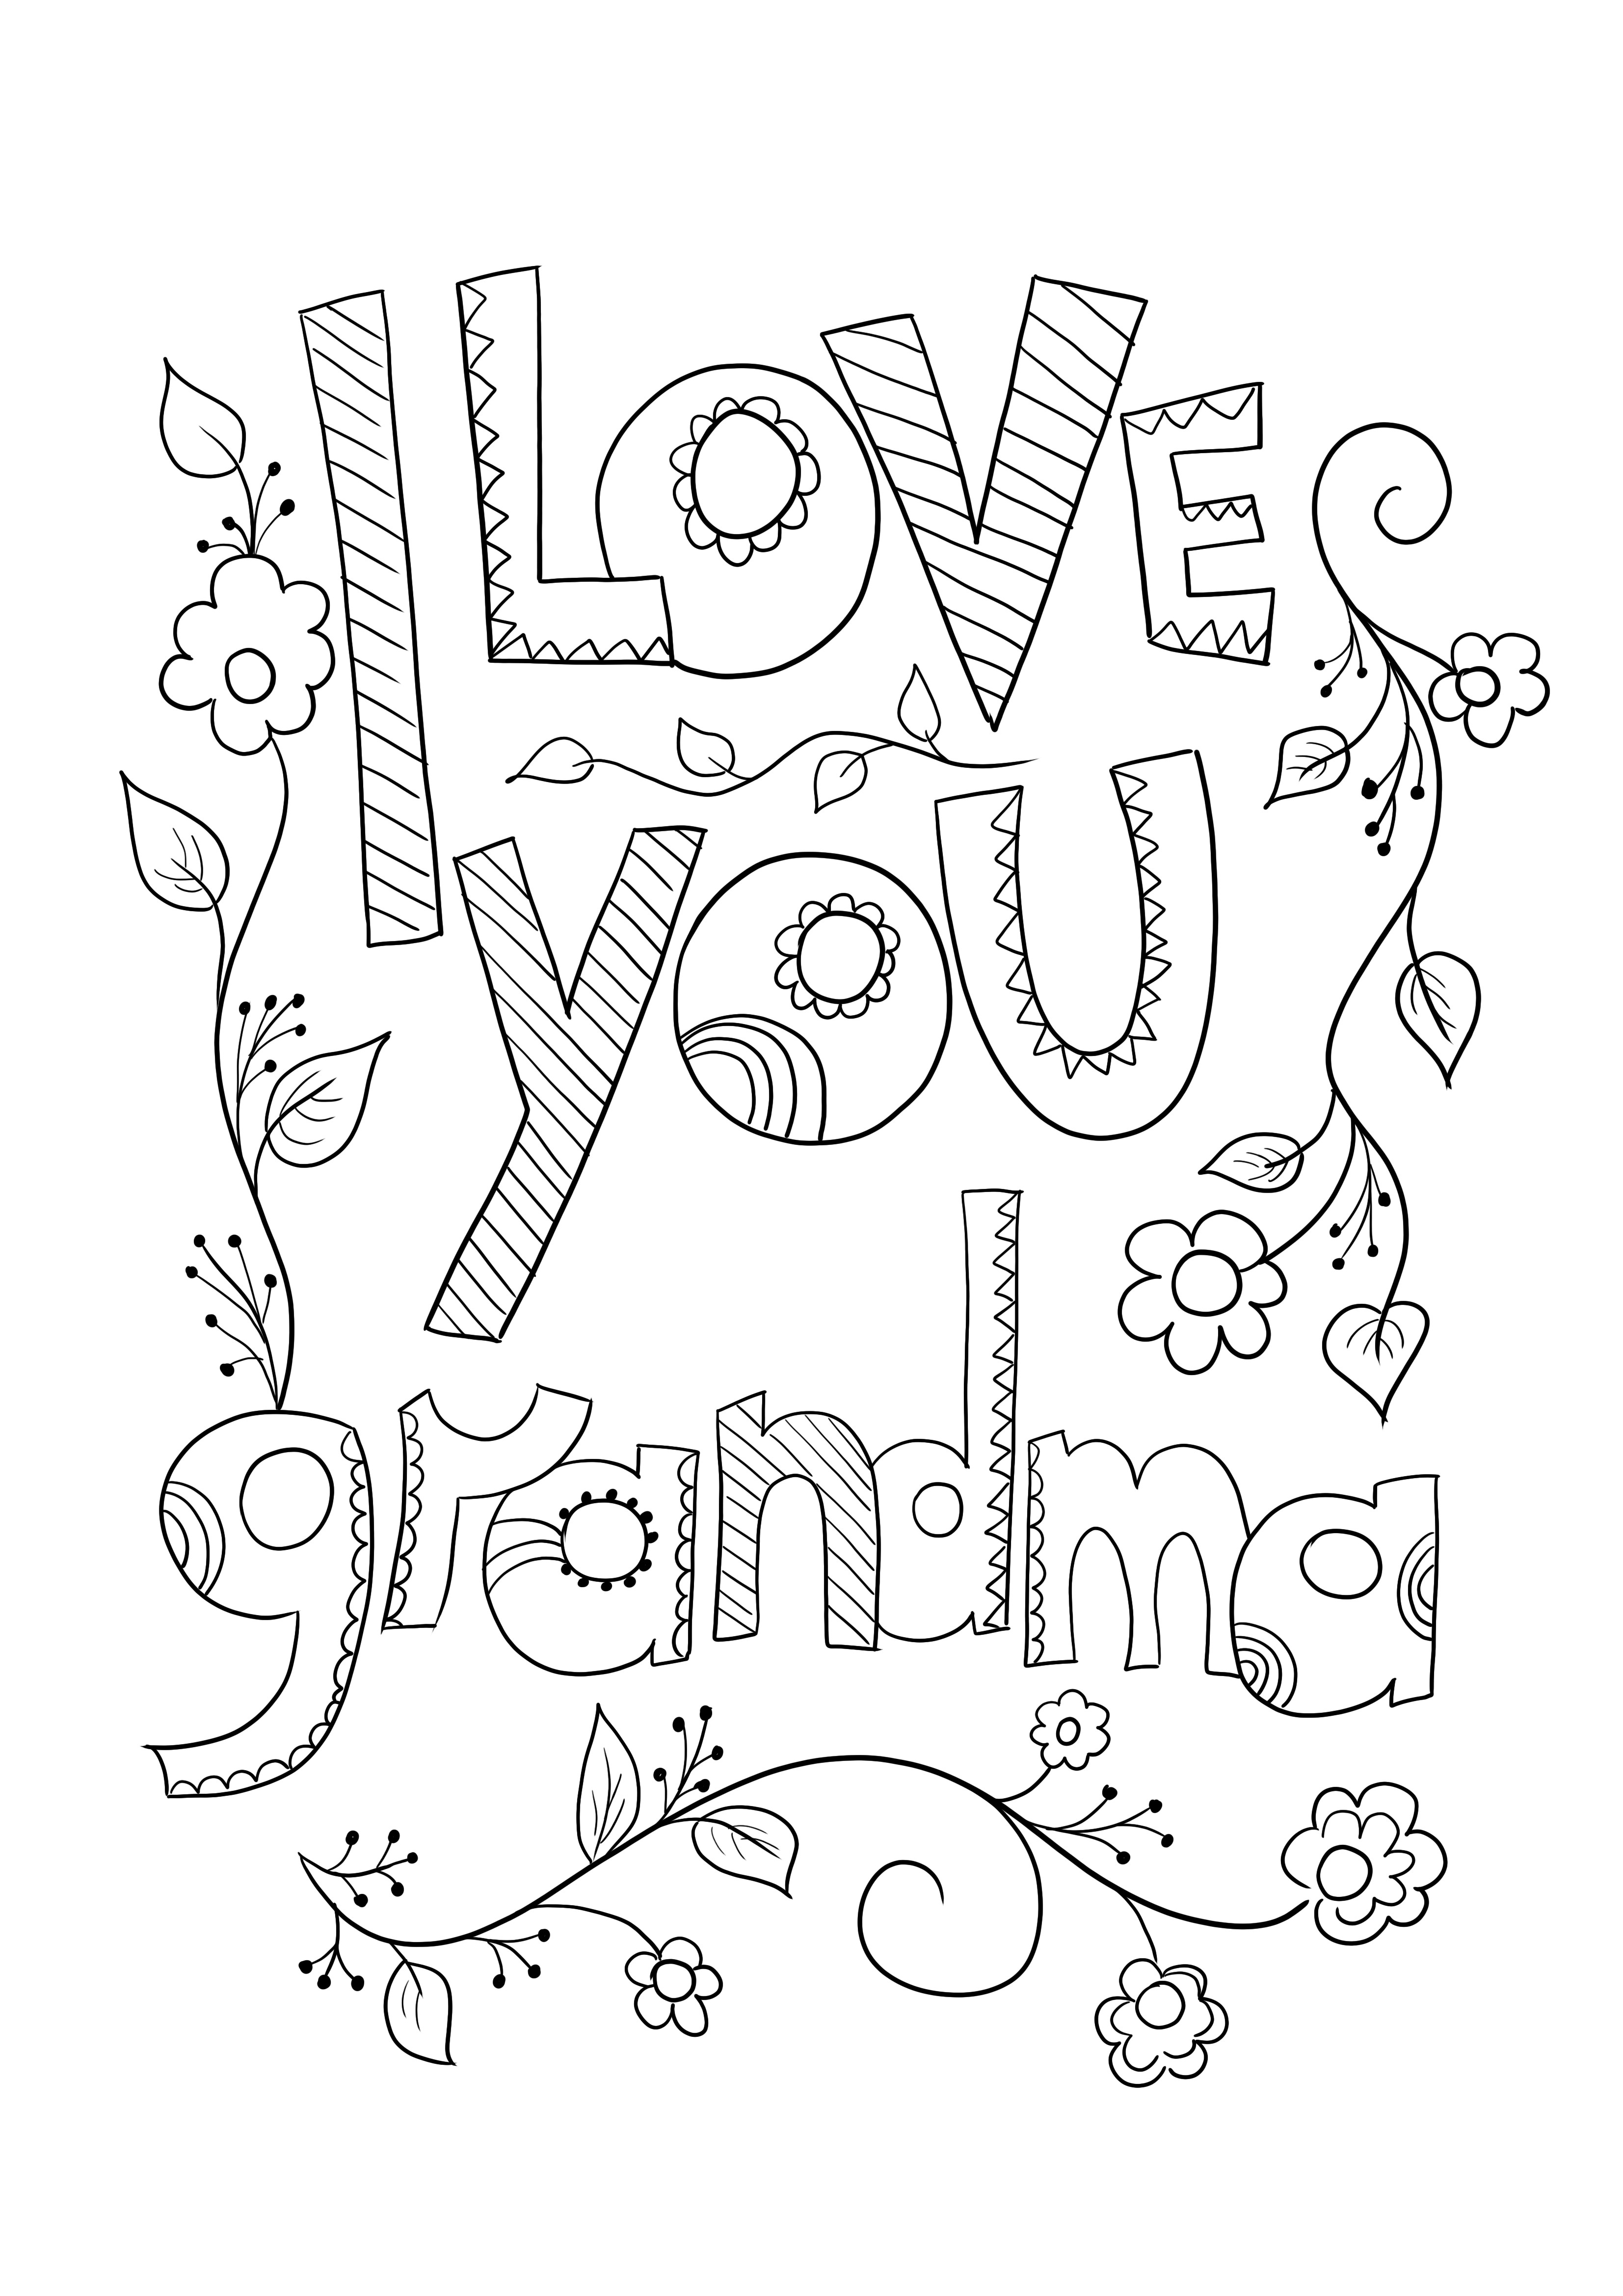 Grandmas Birthday Card Coloring Image For Free Printing 